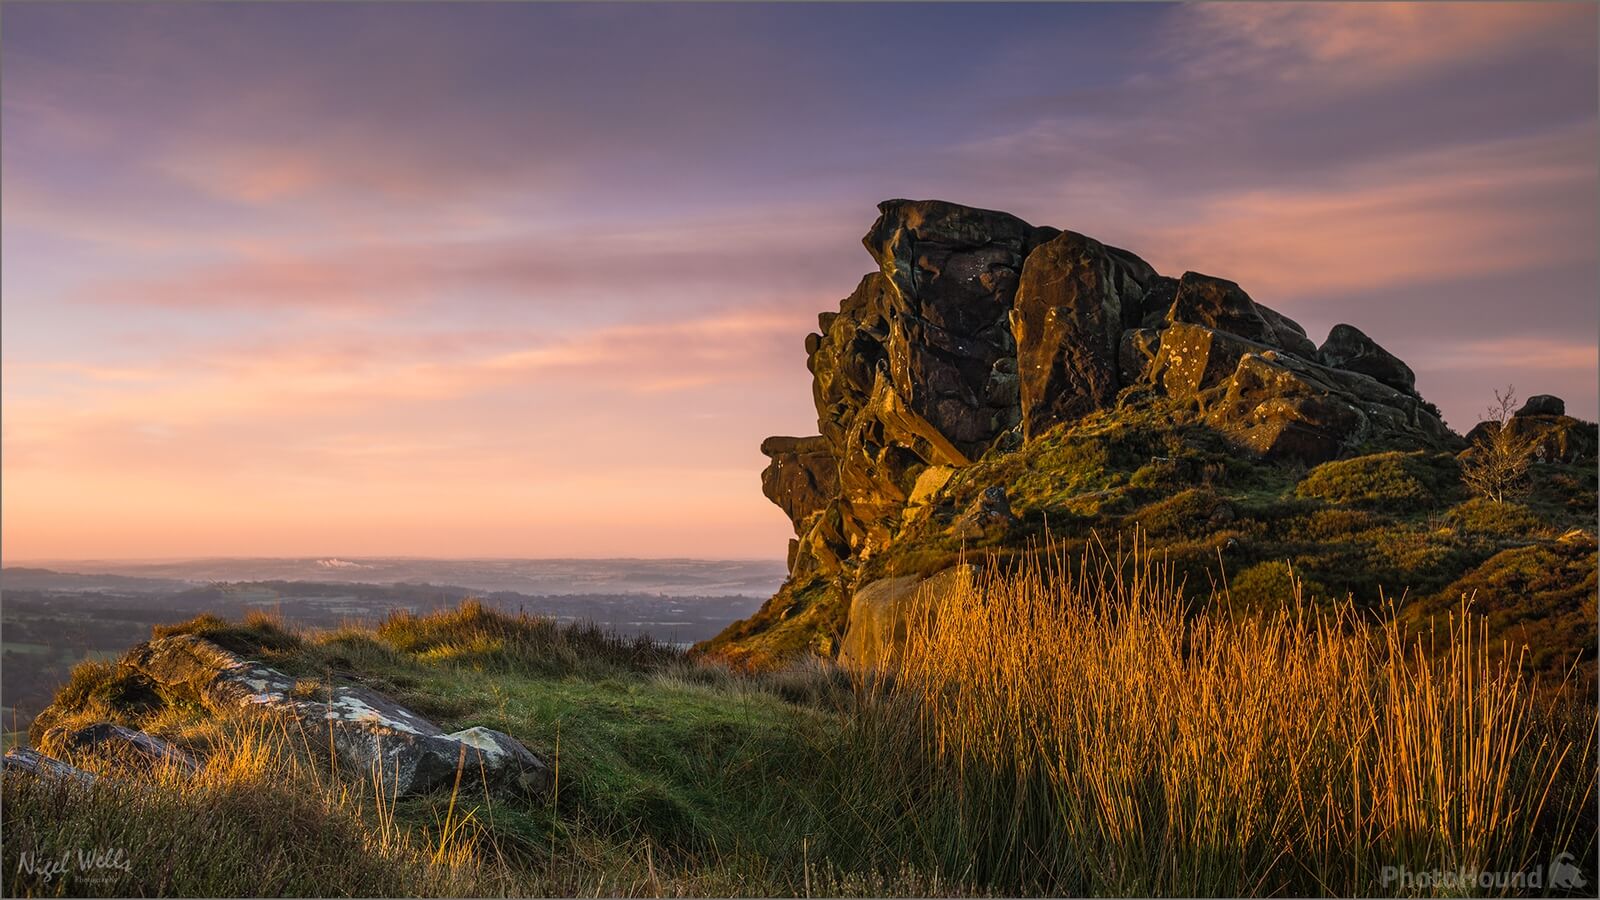 Image of Ramshaw Rocks by Nigel Wells